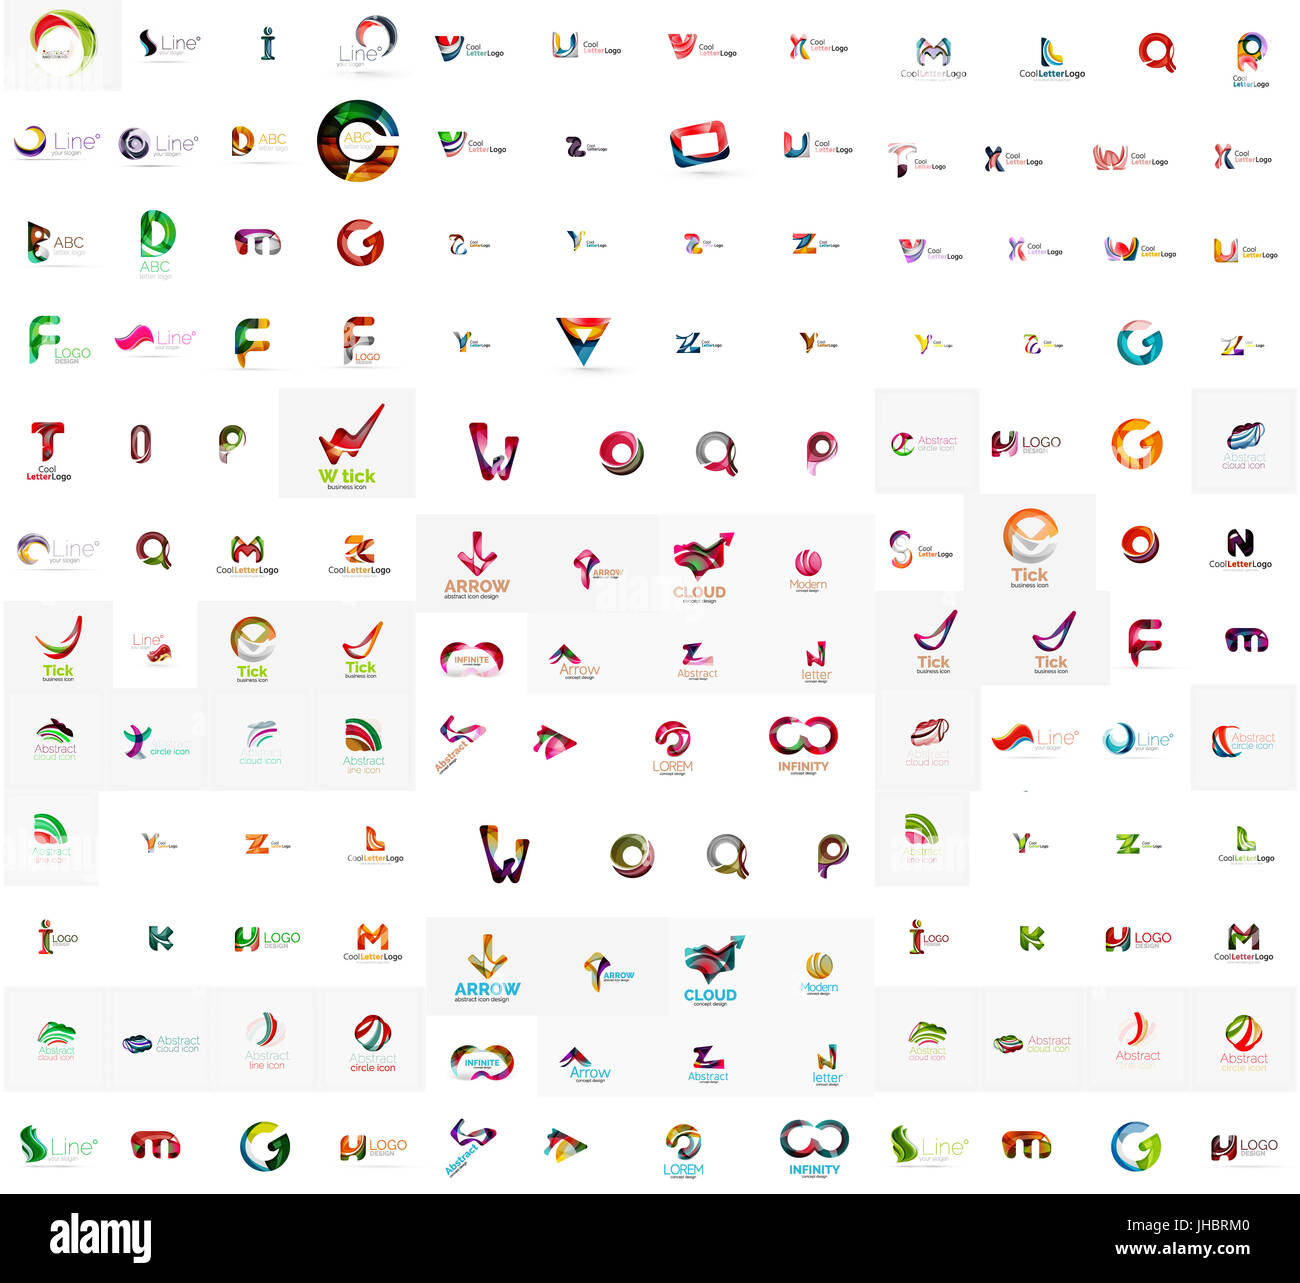 Mega Set Of Geomeric Company Logos Corporate Business Branding Design Elements Stock Photo Alamy